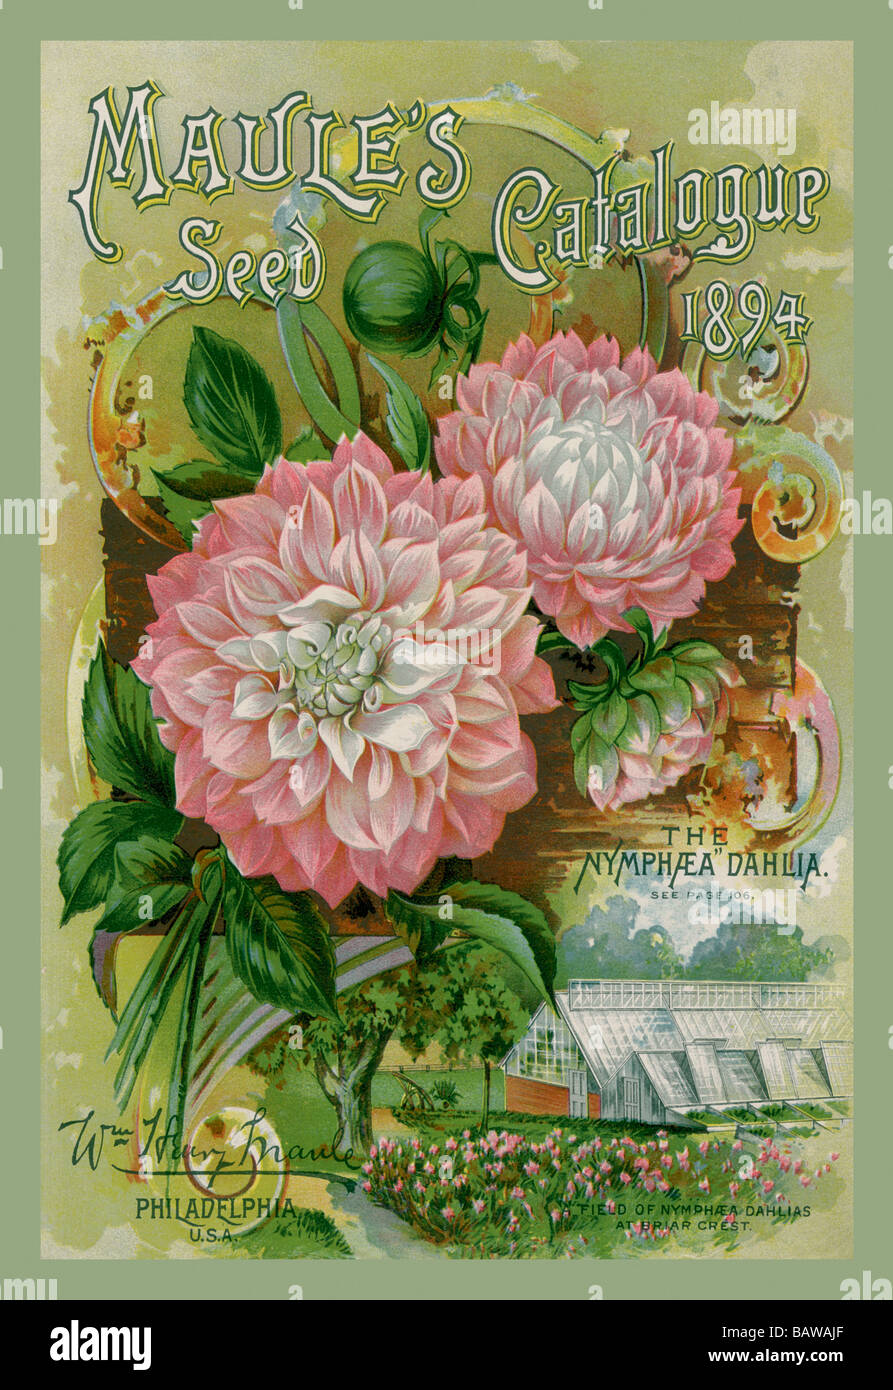 Maule's Seed Catalogue,1894 Stock Photo